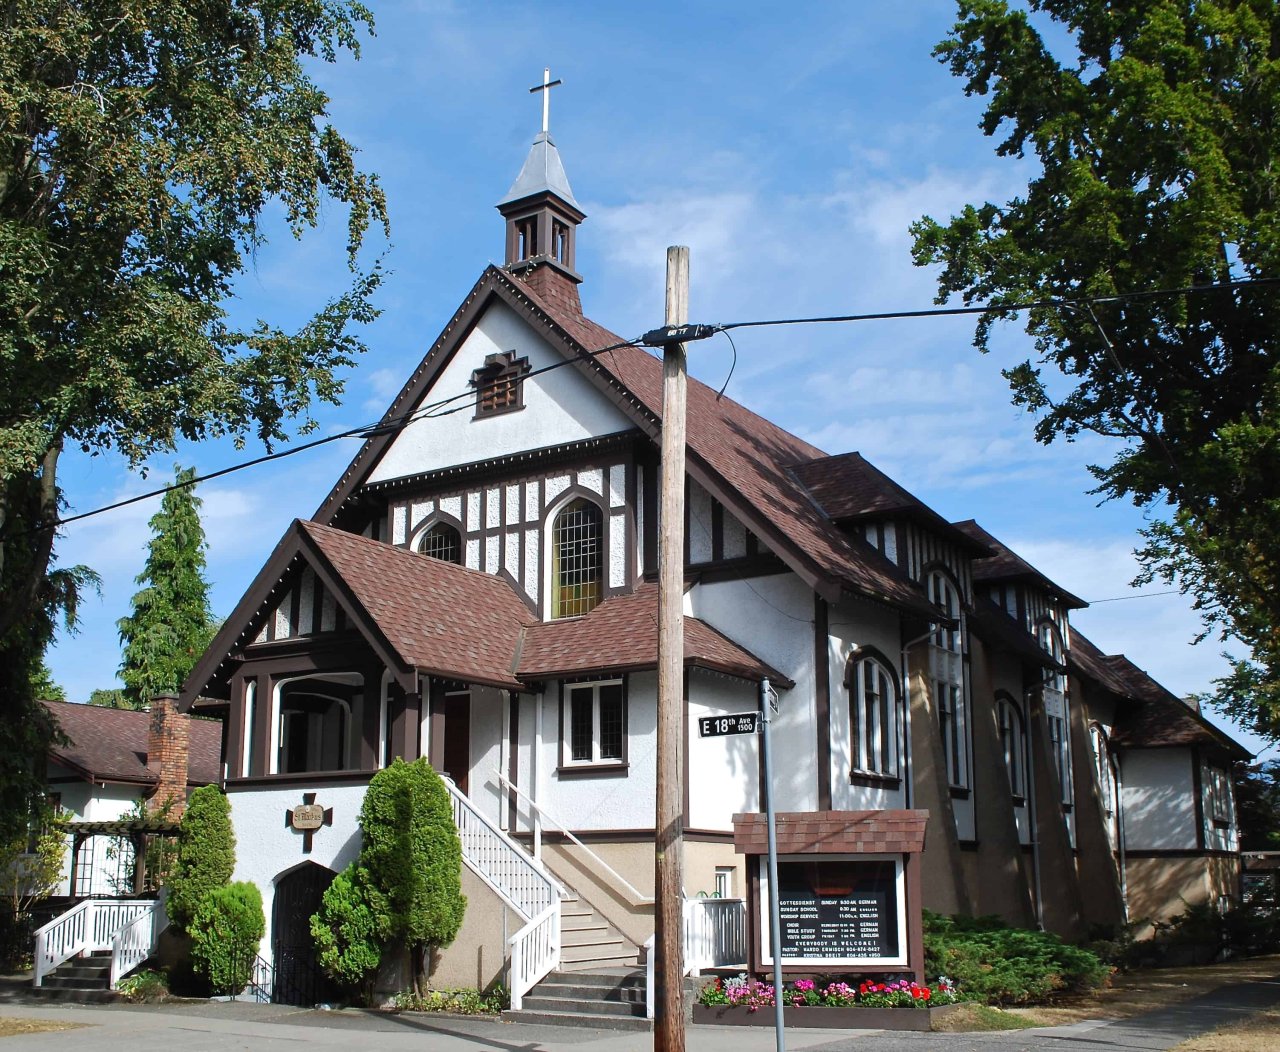 Vancouver Heritage Site Finder